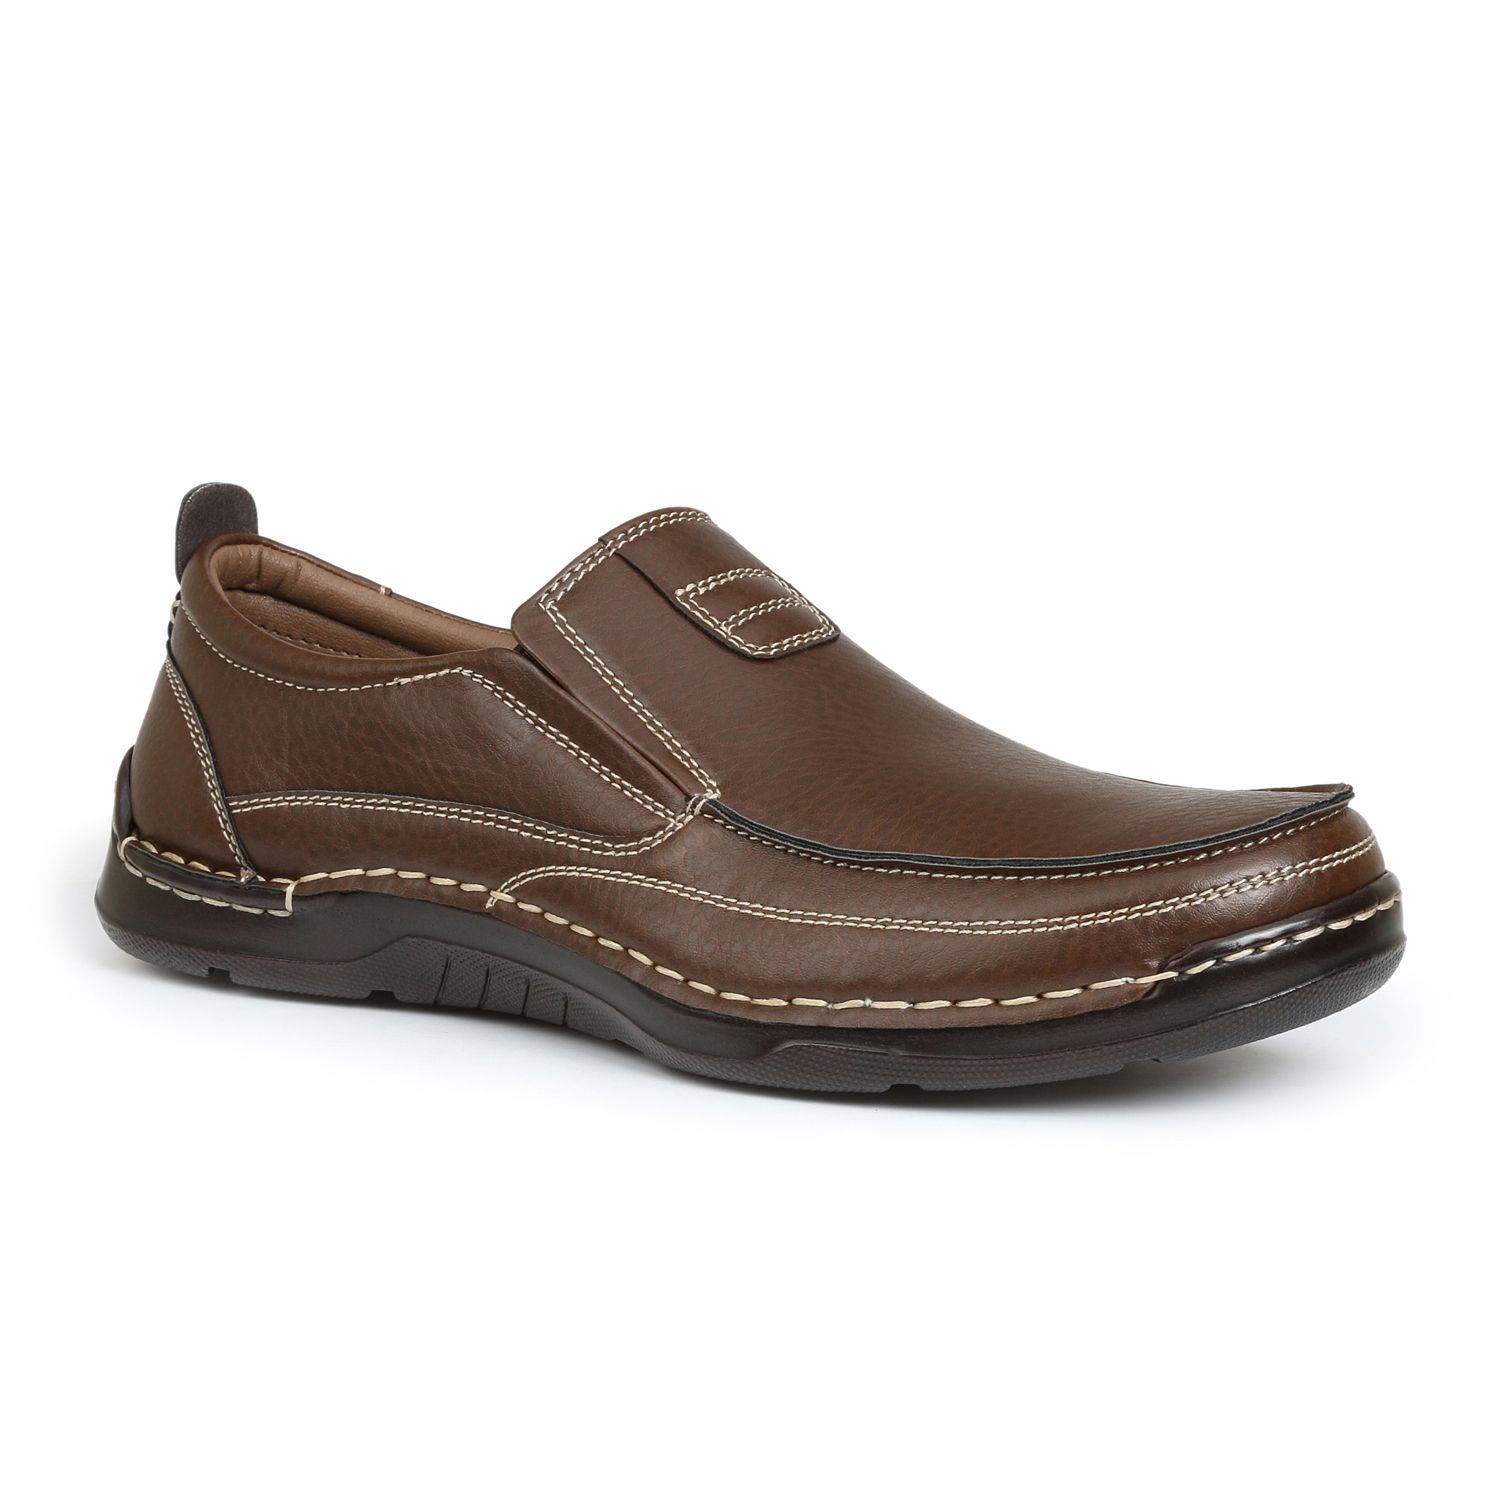 IZOD Forman Men's Slip-On Shoes